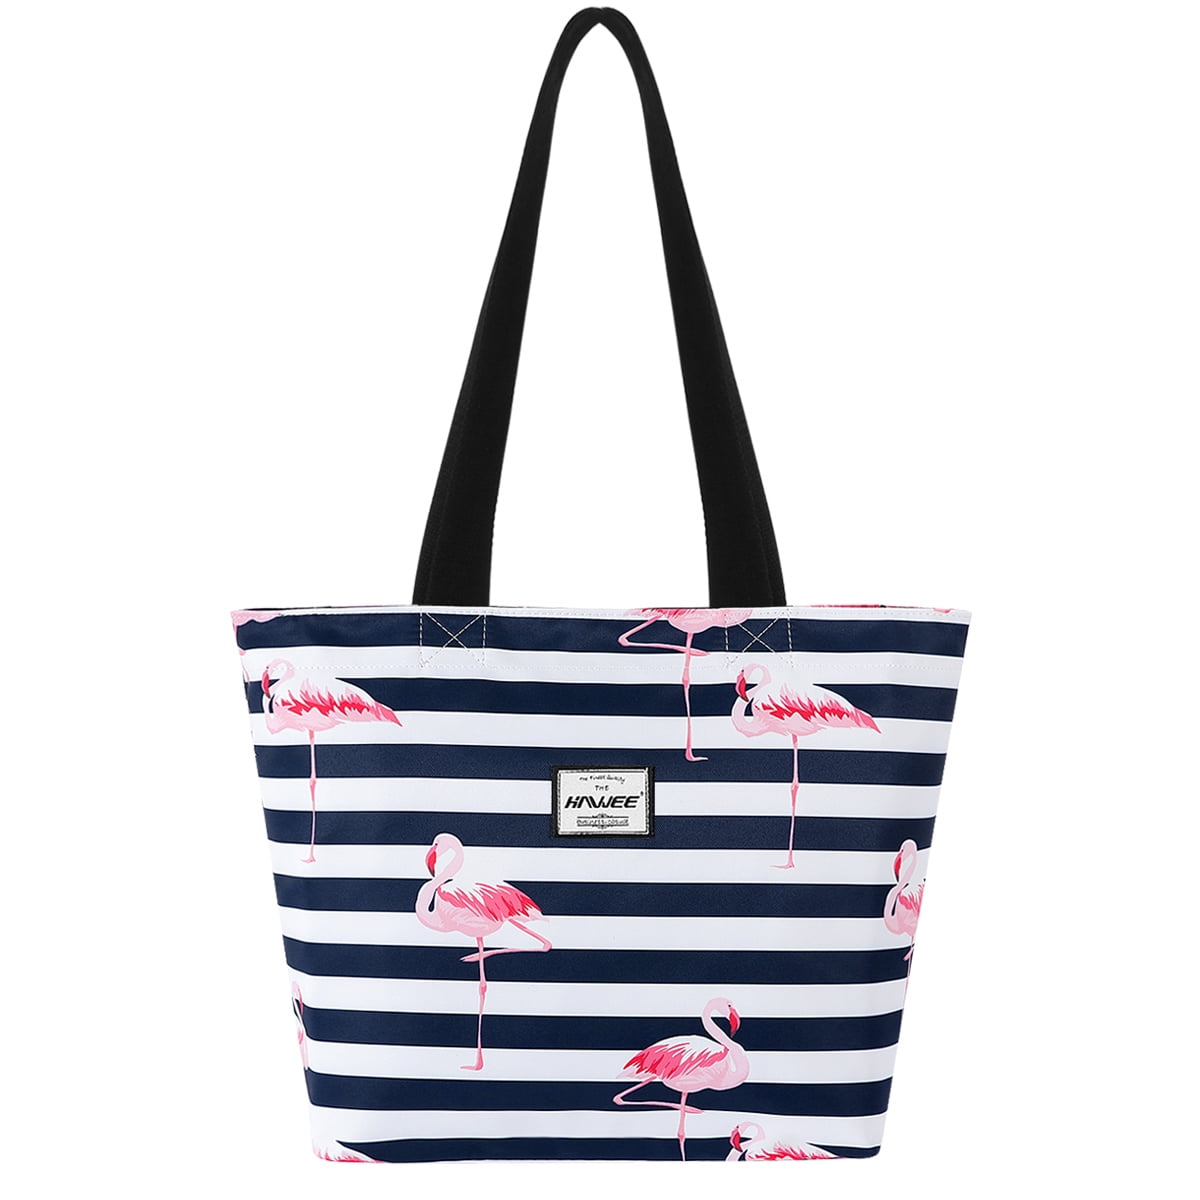 Womens Top Handle Satchel Handbag Flamingo Pineapple Lemons Ladies PU Leather Shoulder Bag Crossbody Bag 